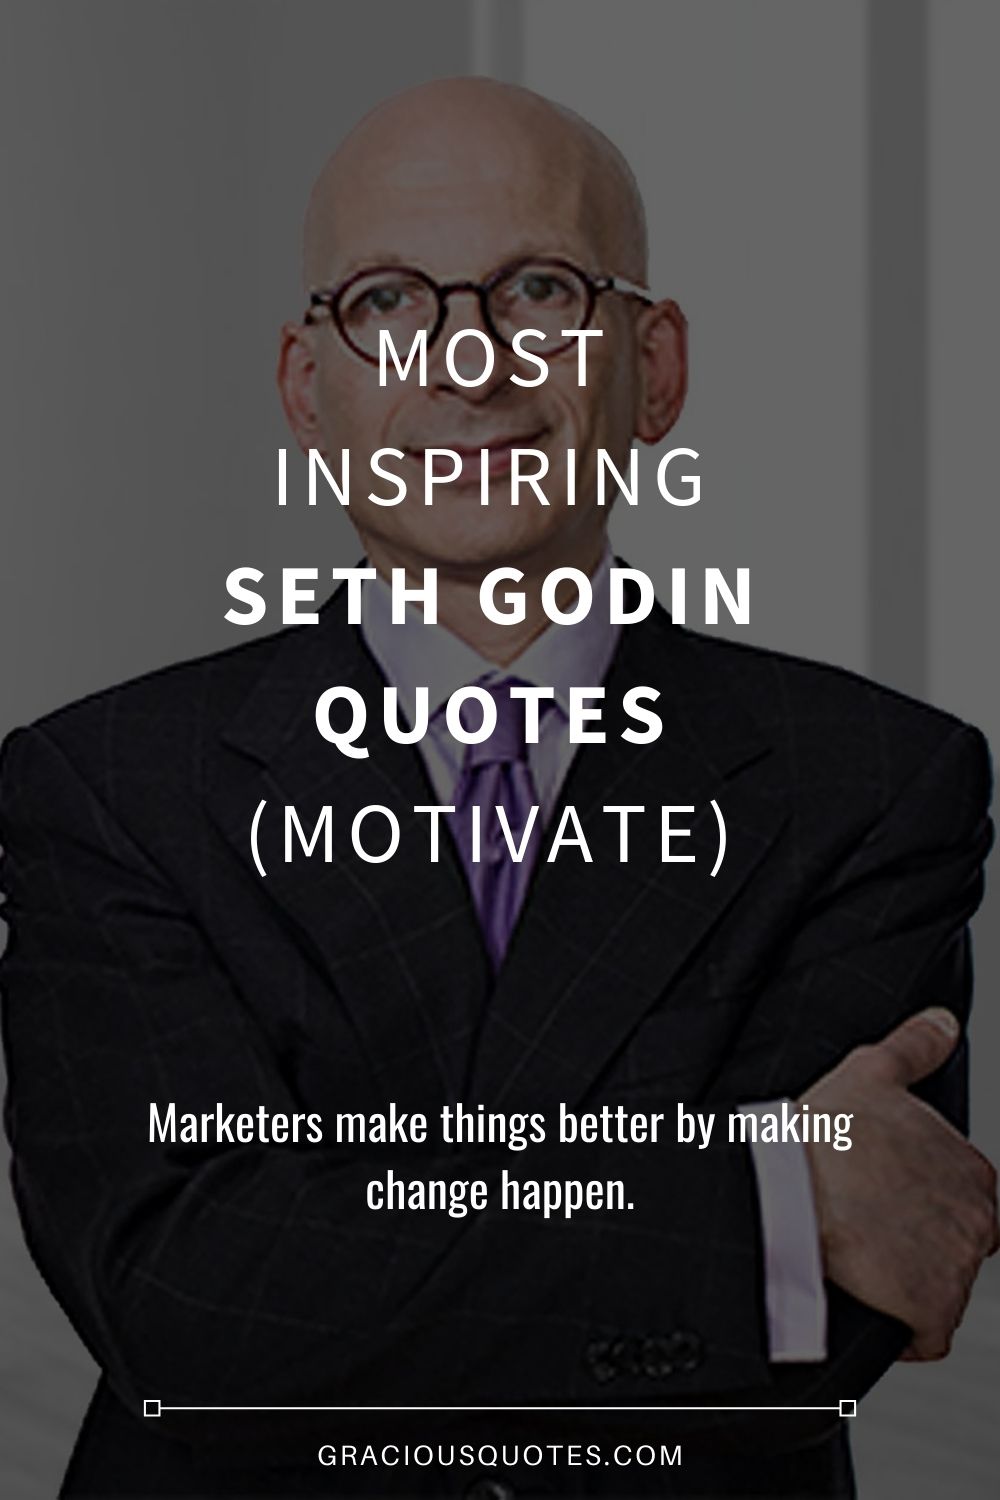 Most Inspiring Seth Godin Quotes (MOTIVATE) - Gracious Quotes